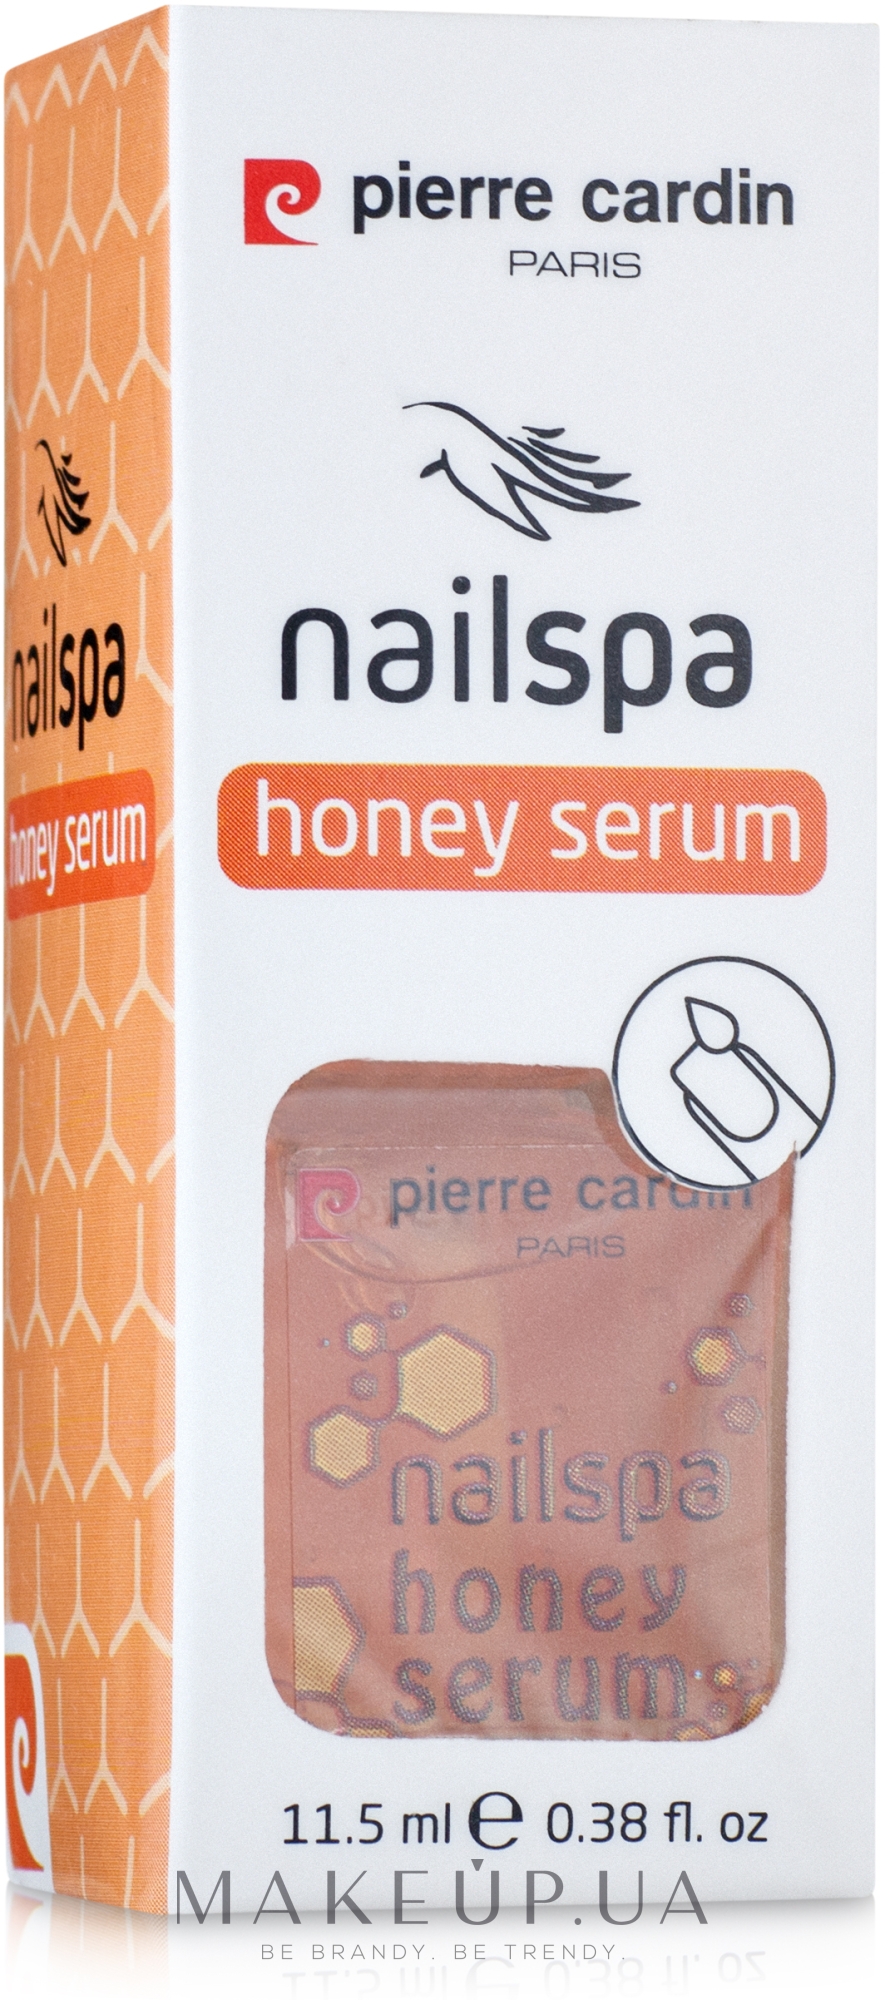 Сыворотка для ухода за ногтями - Pierre Cardin Nail Spa Honey — фото 11.5ml